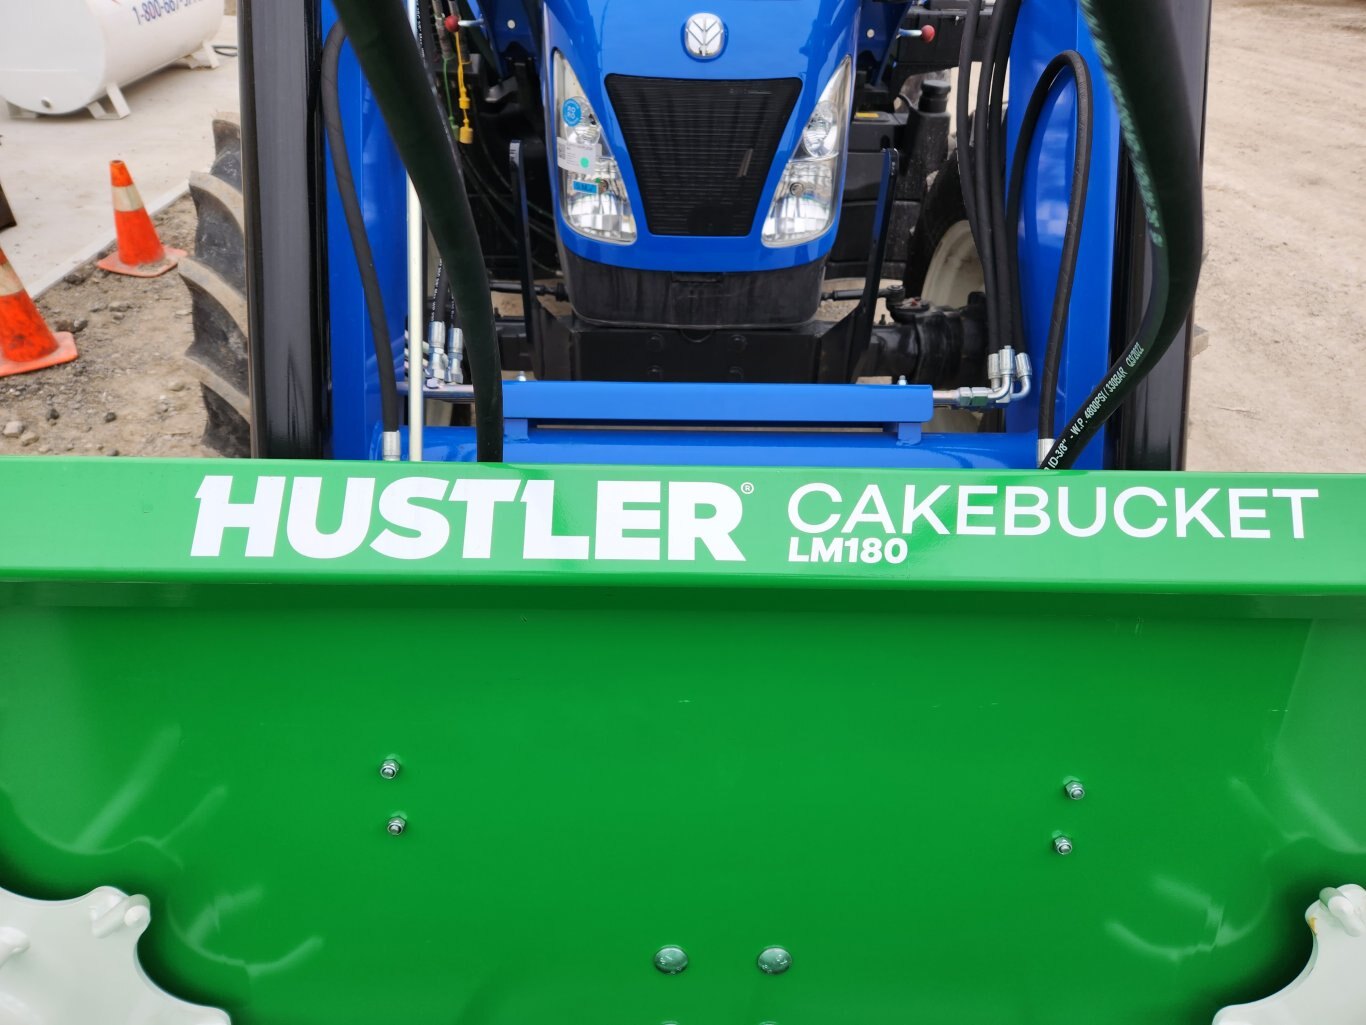 NEW Hustler LM180 CakeBucket